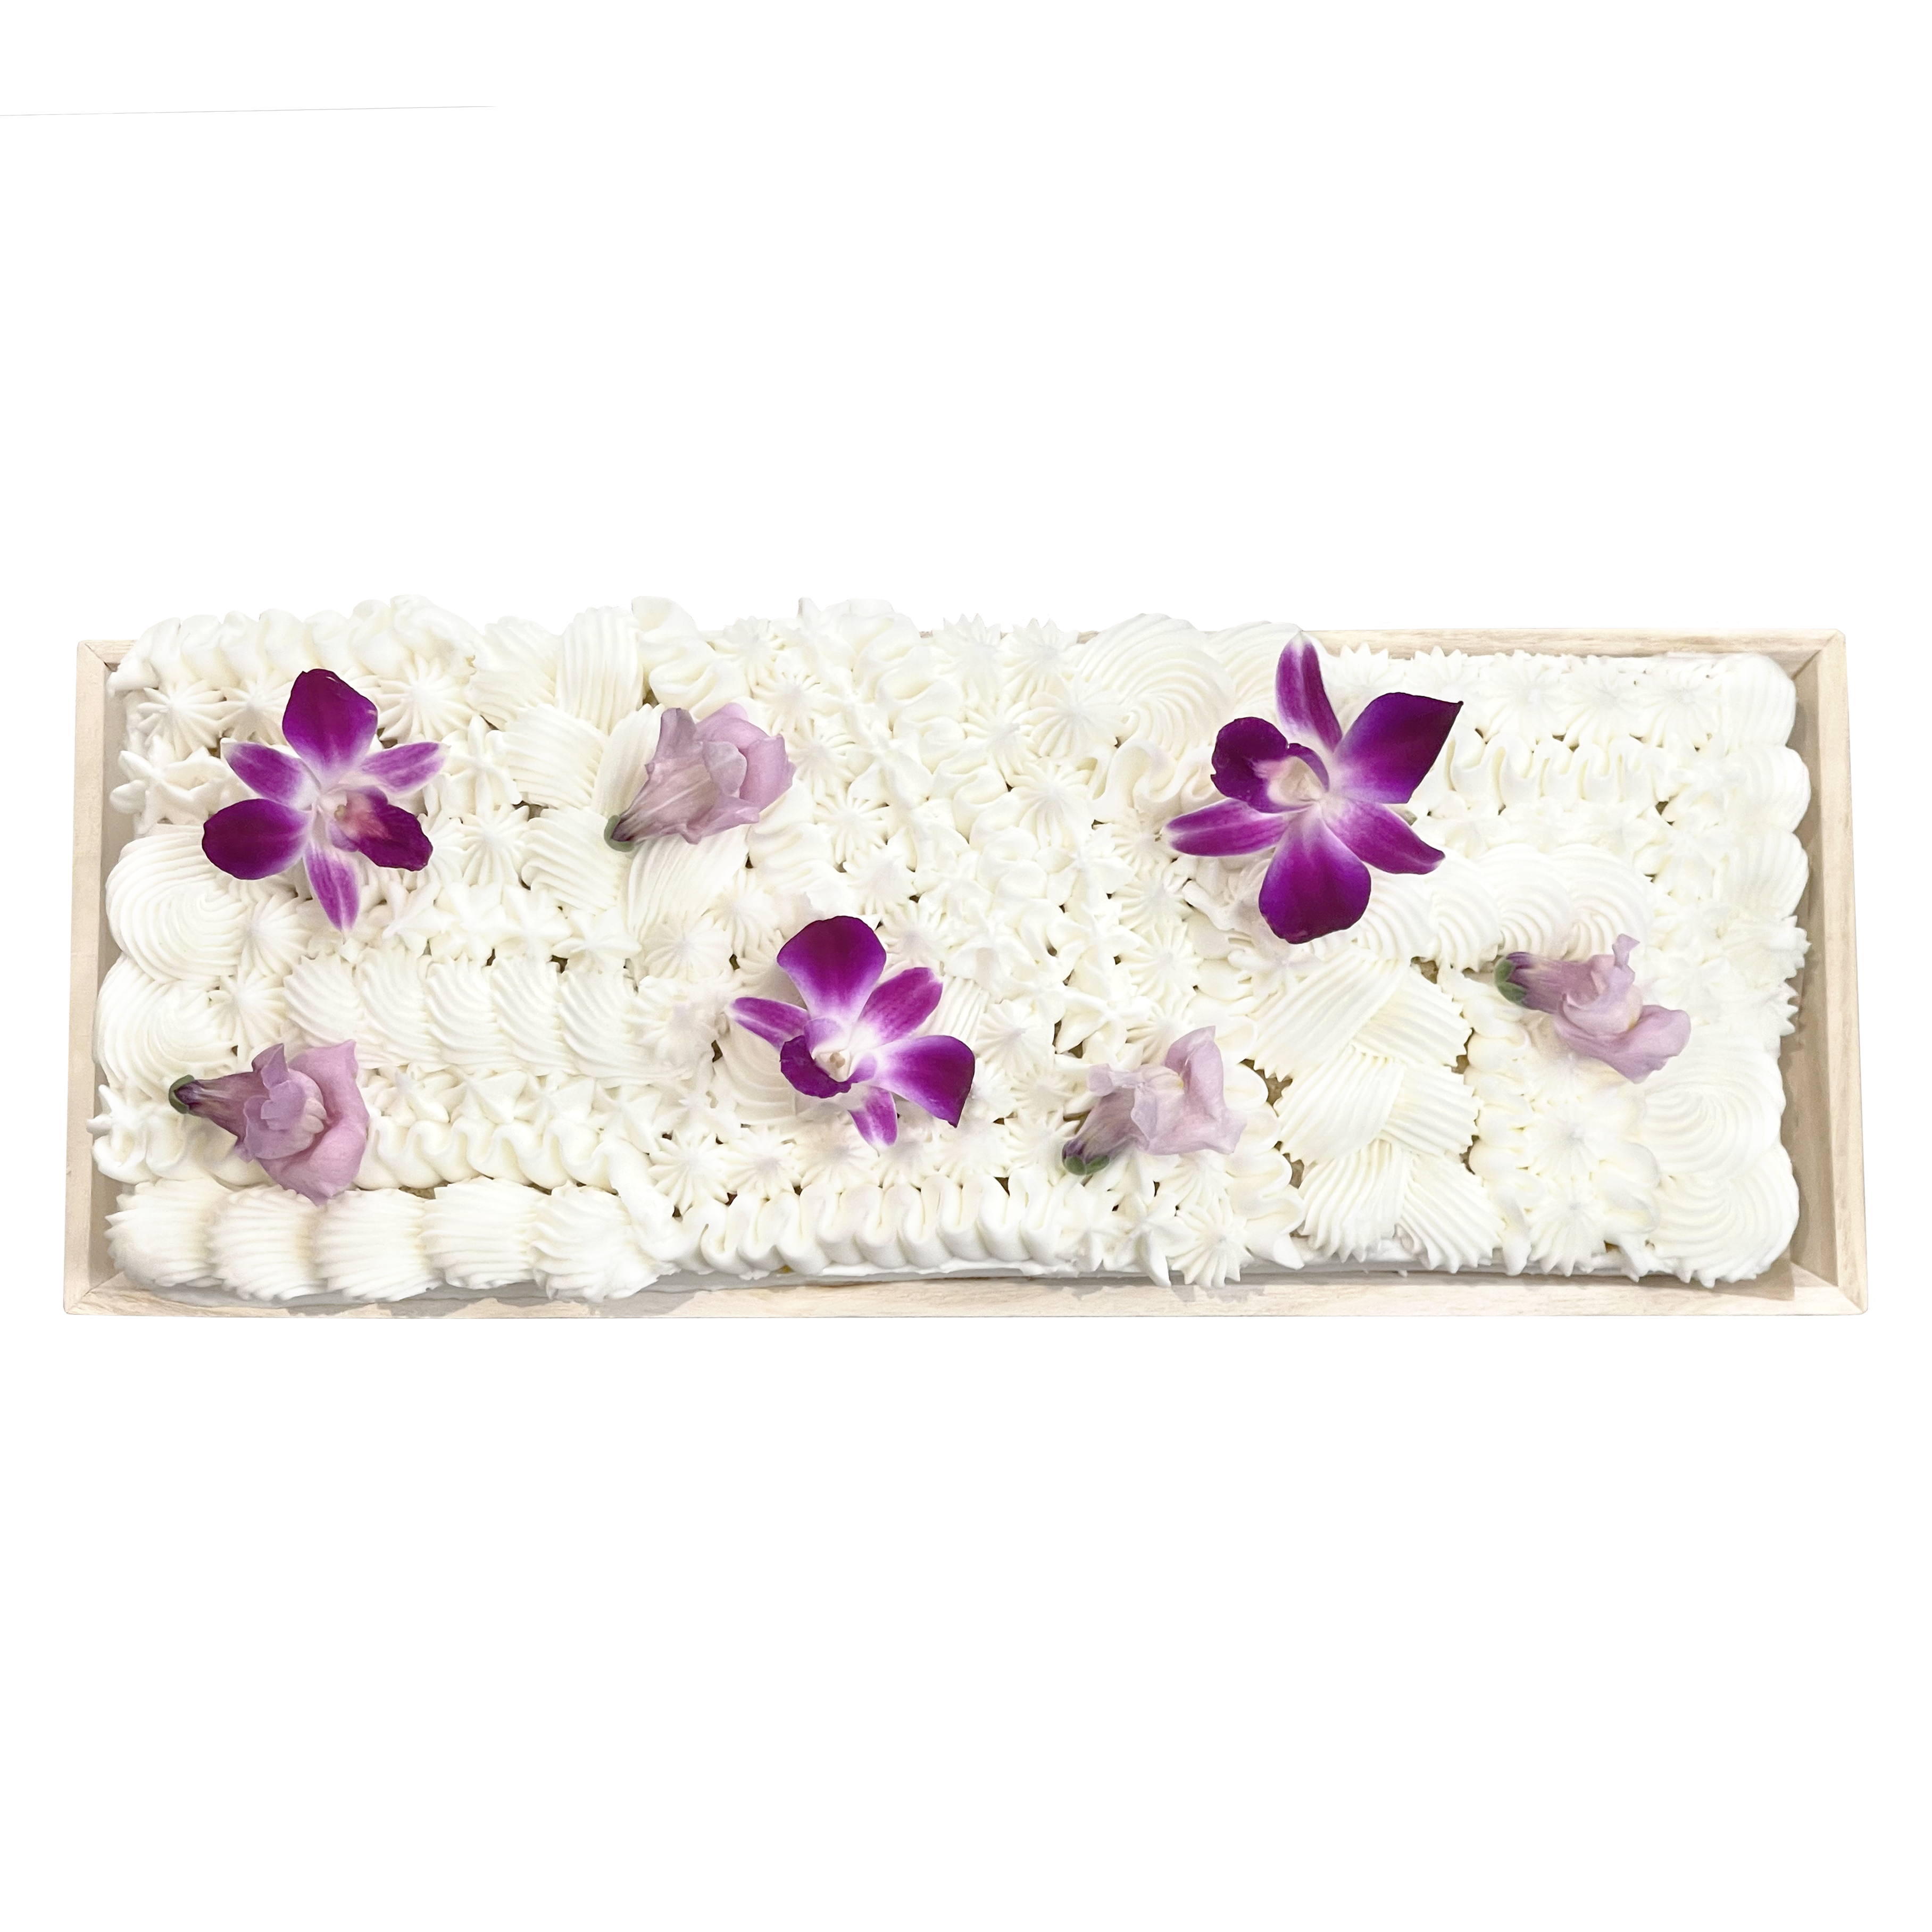 Floral Table Runner Cake